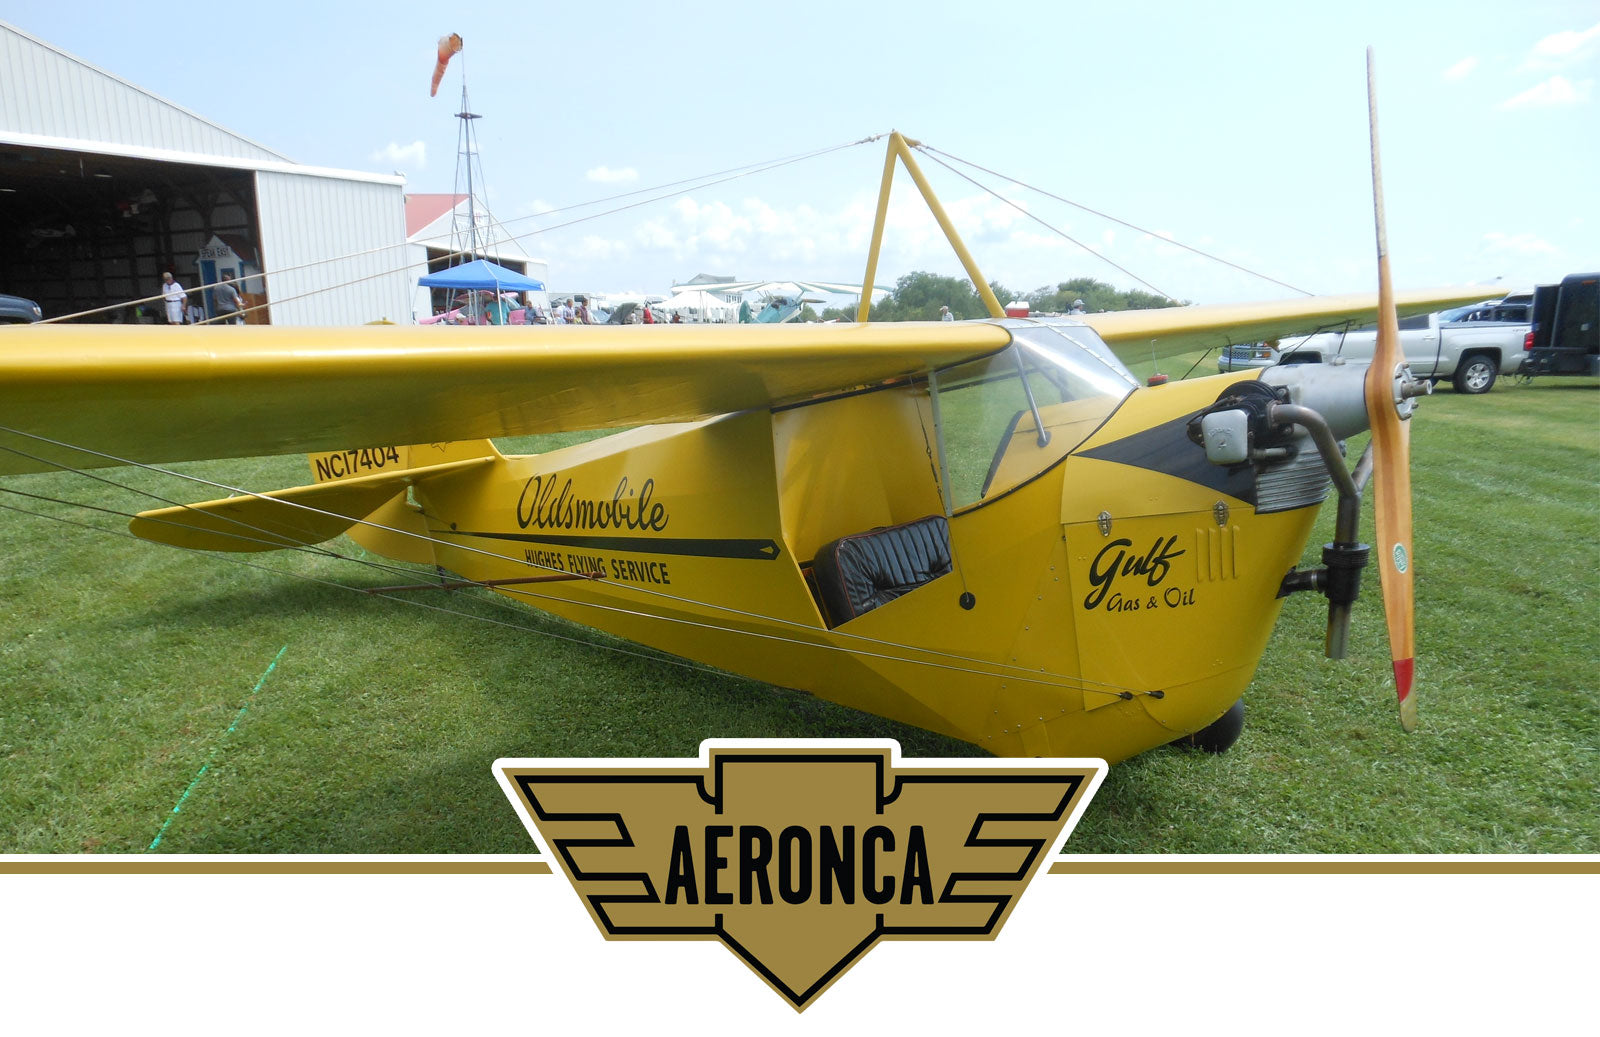 Aeronca aircraft corporation